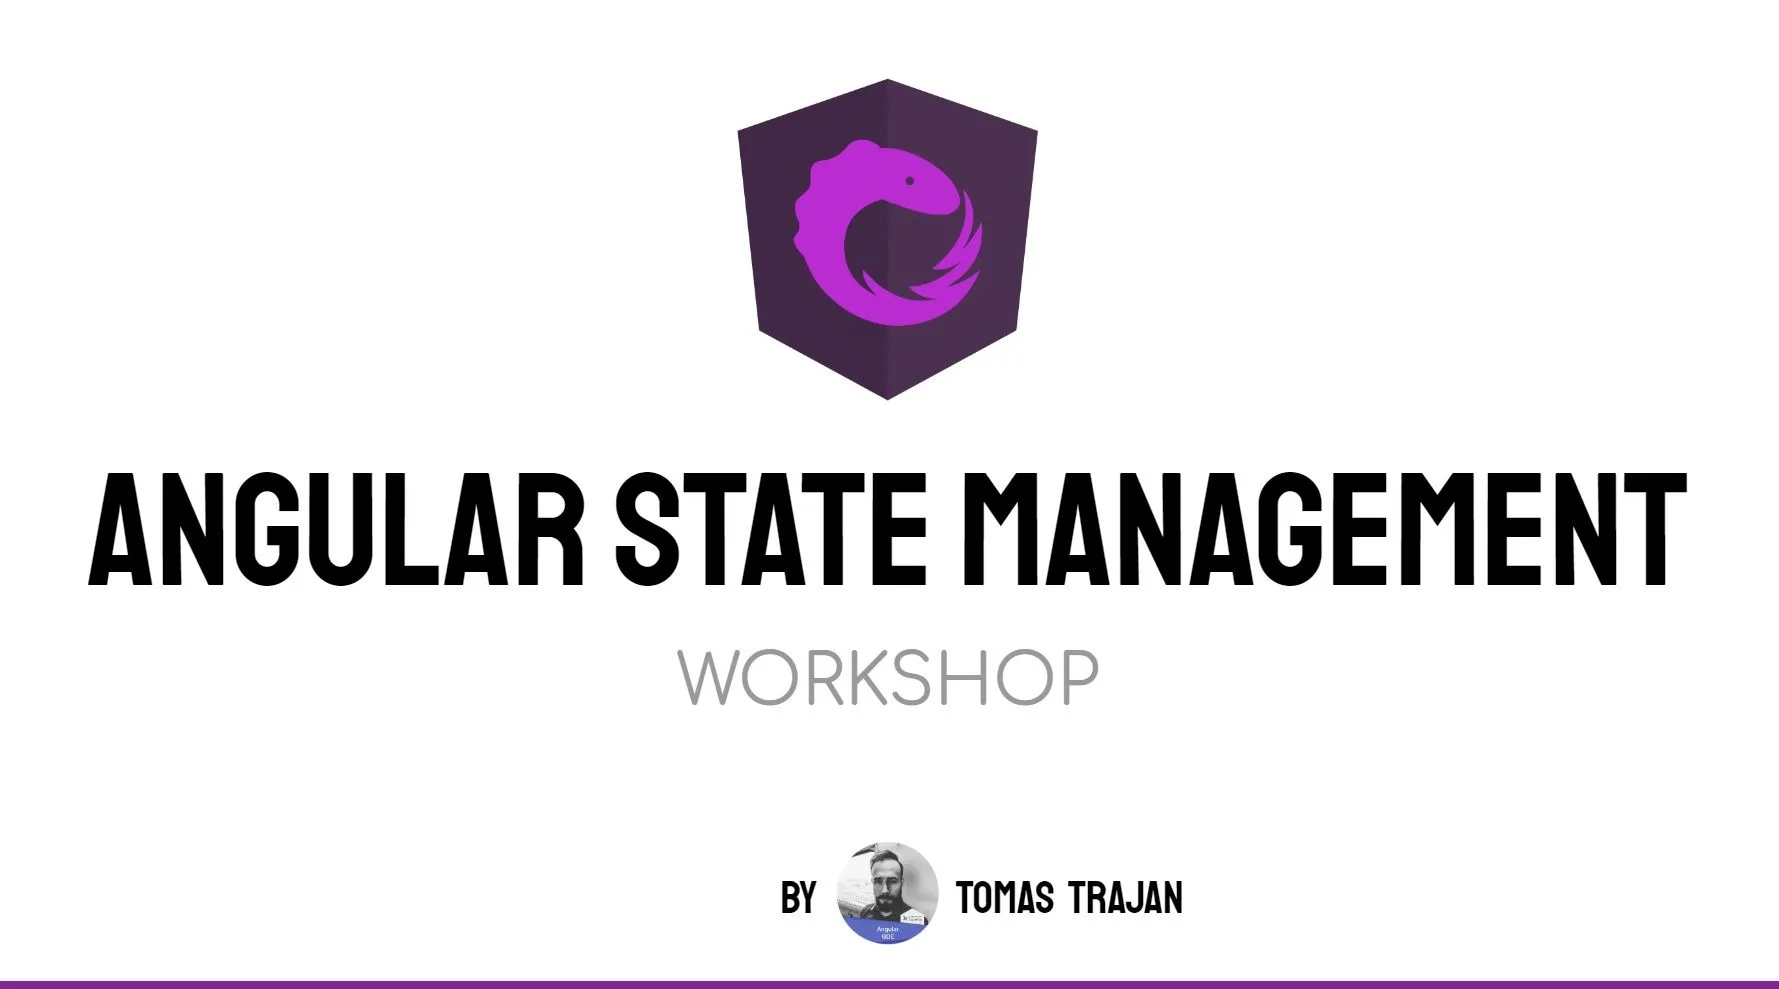 Angular State Management Workshop by Tomas Trajan - Example